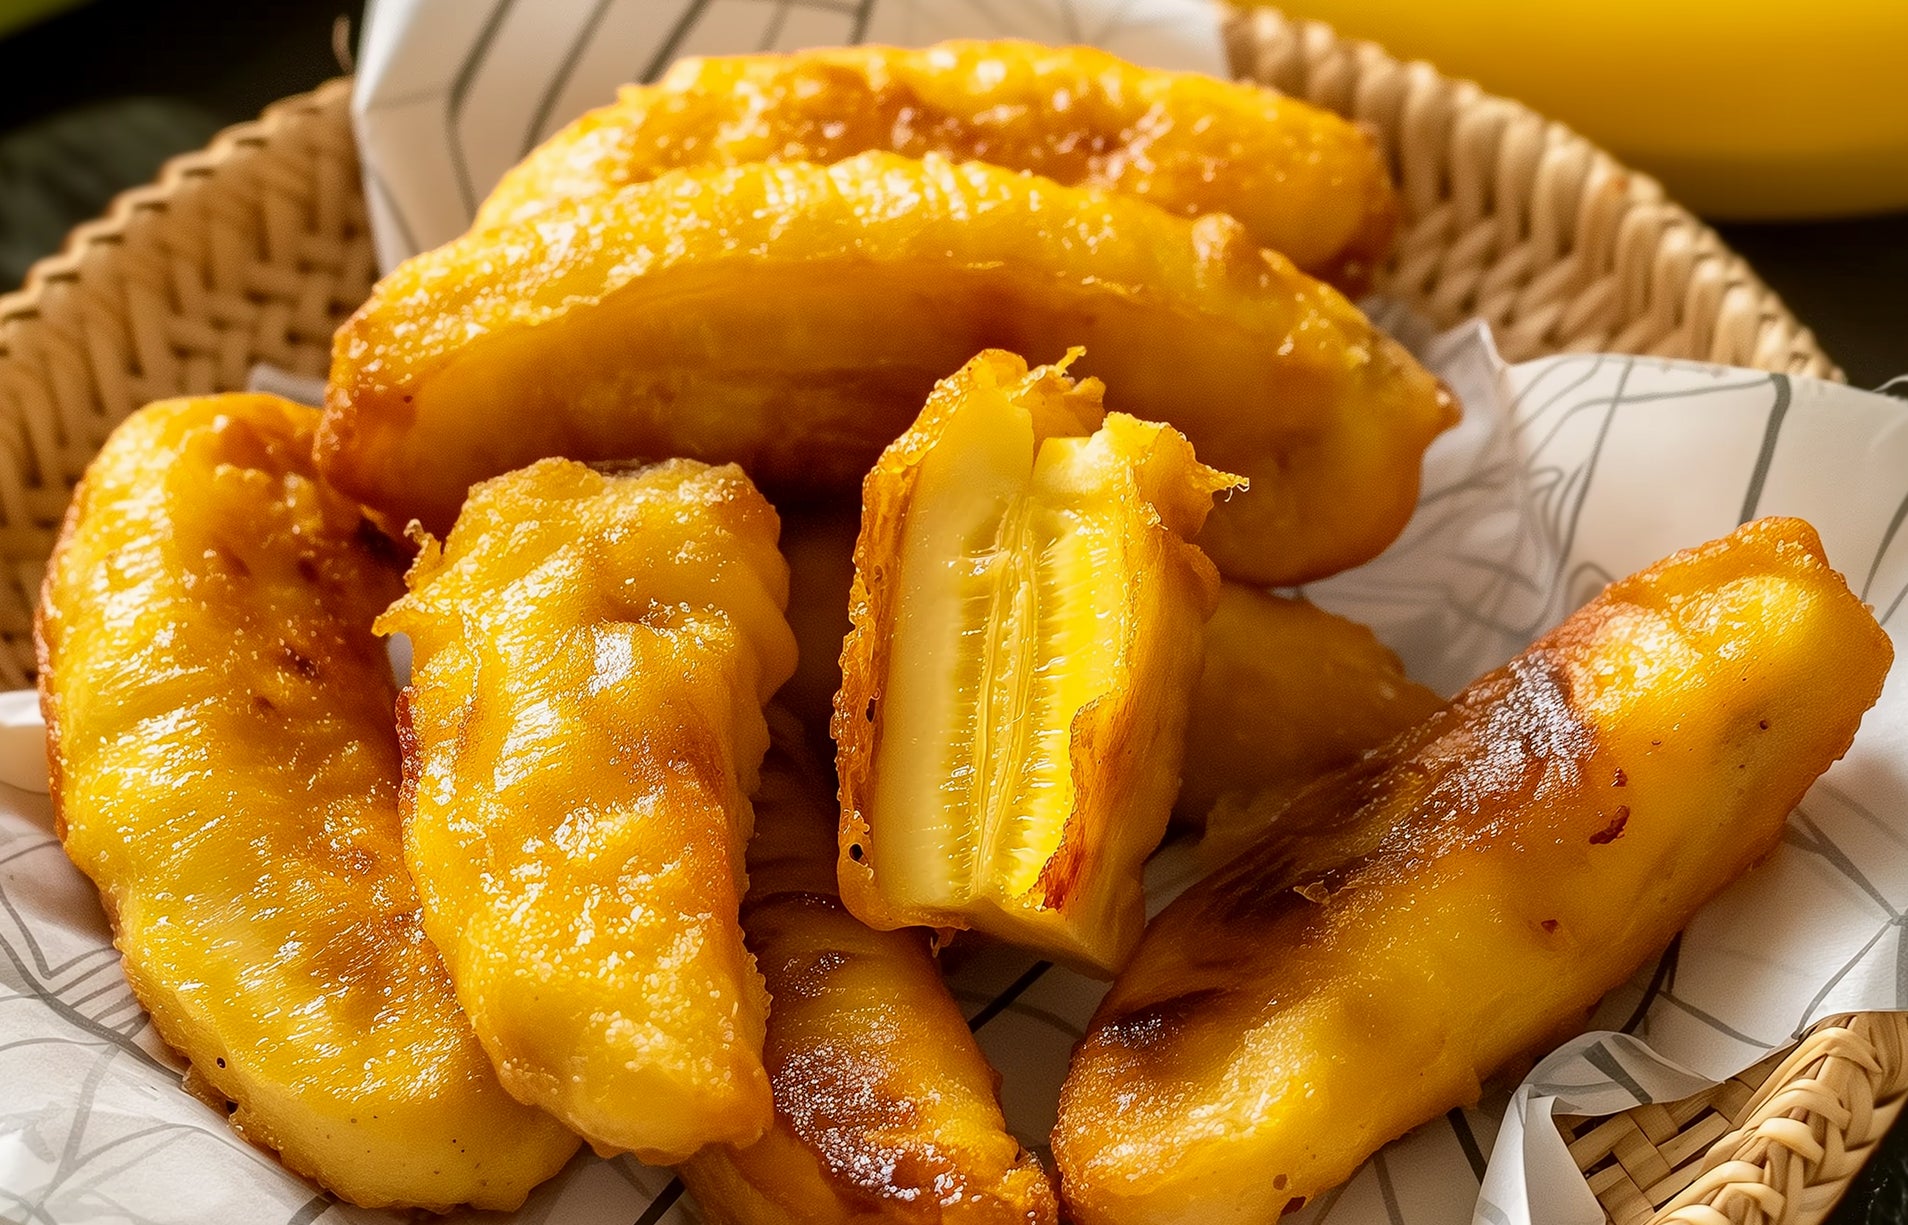 Air Fryer Goreng Pisang (Banana Fritters) Recipe